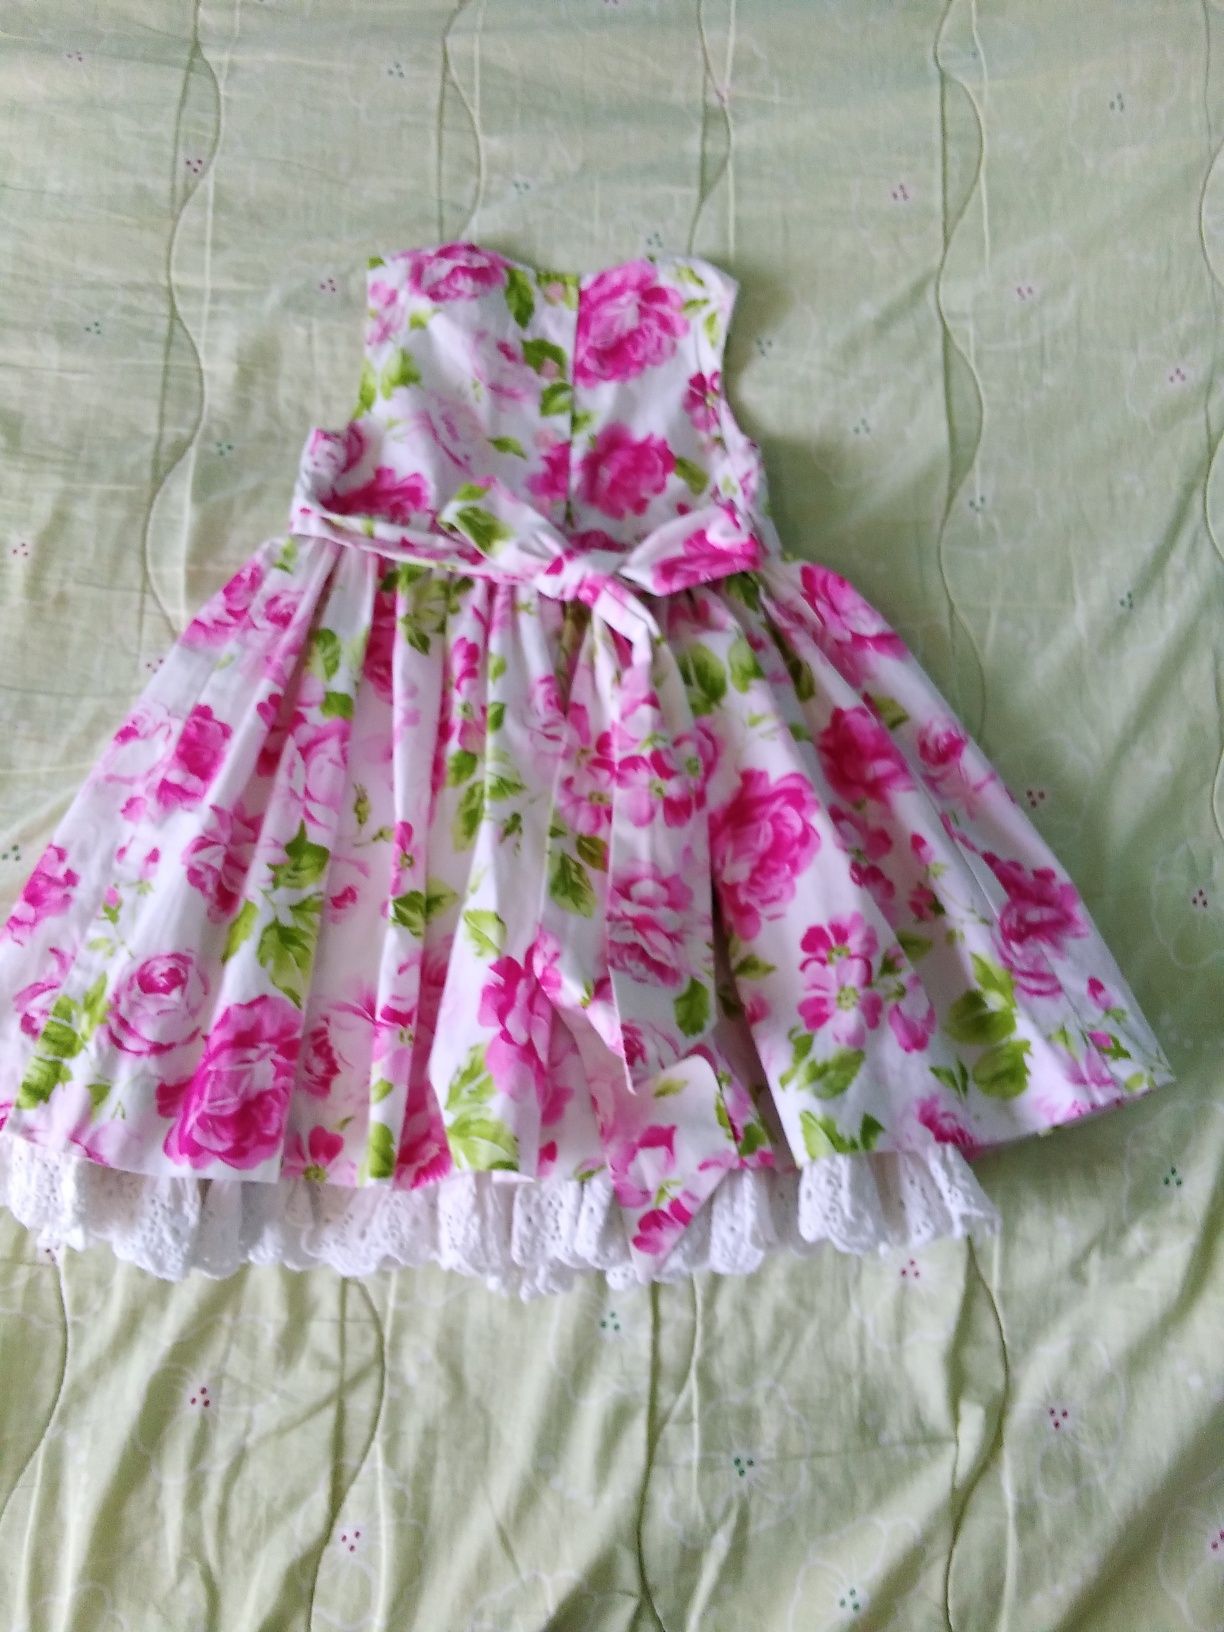 Детска рокля 3-4години